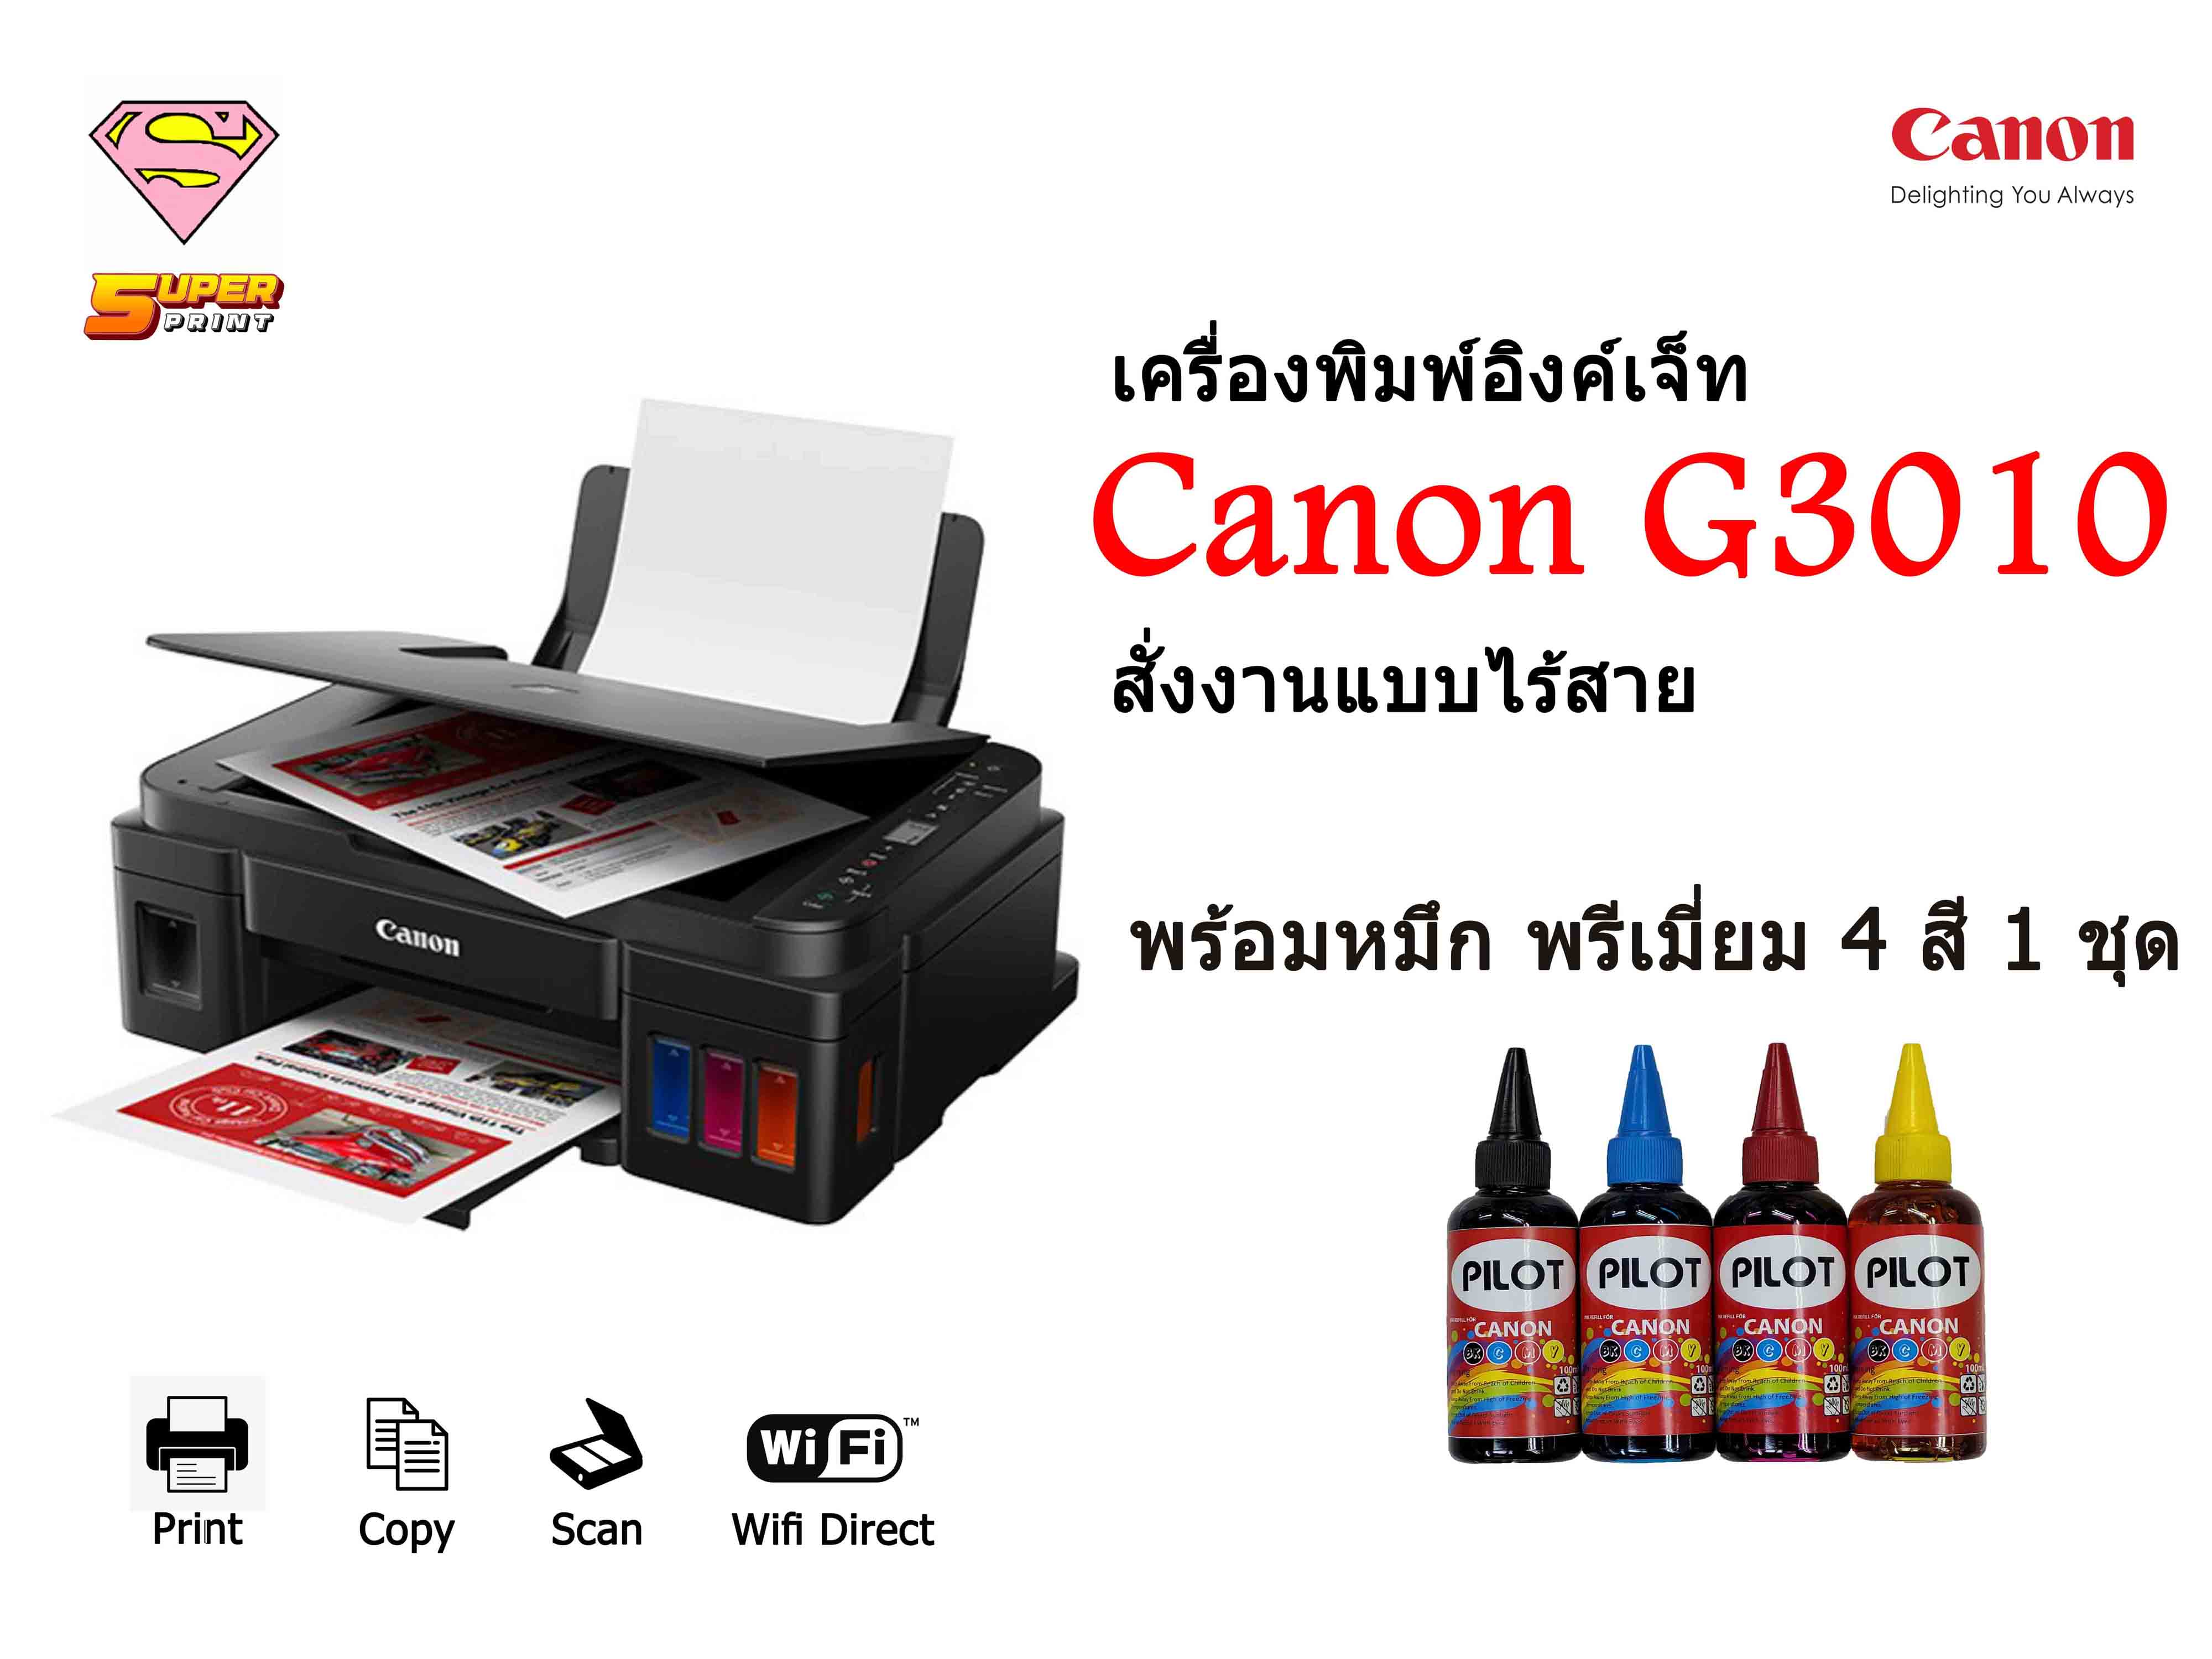 Canon G3010 พร้อมหมึกพรีเมี่ยม 4 ขวด (Wi-Fi Direct พิมพ์ผ่านมือถือ/Print/Scan/Copy) ไม่รองรับ Mac OS